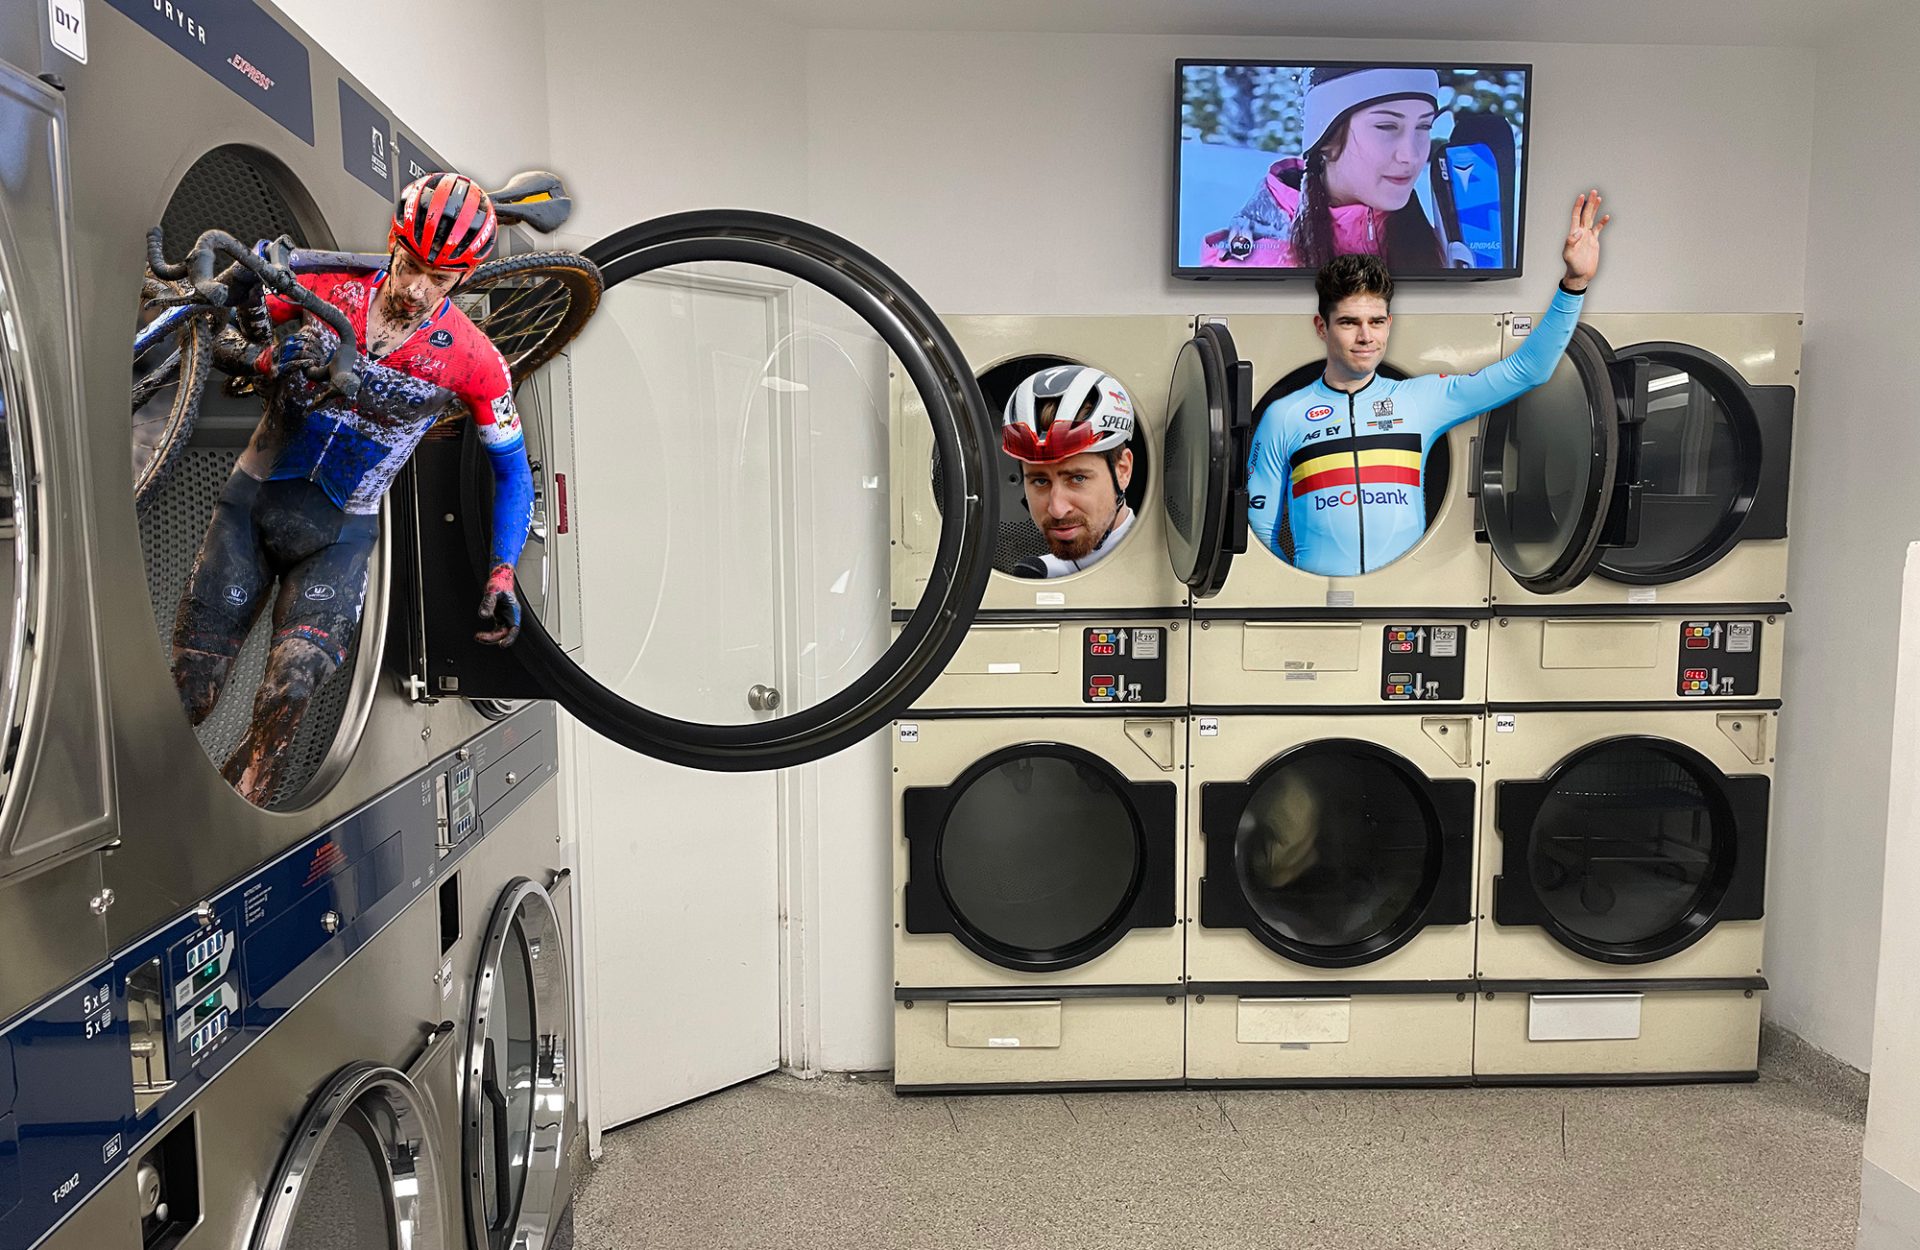 Lars van der Haar, Peter Sagan and Wout van Aert photoshopped into a laundromat in Santa Barbara, California.